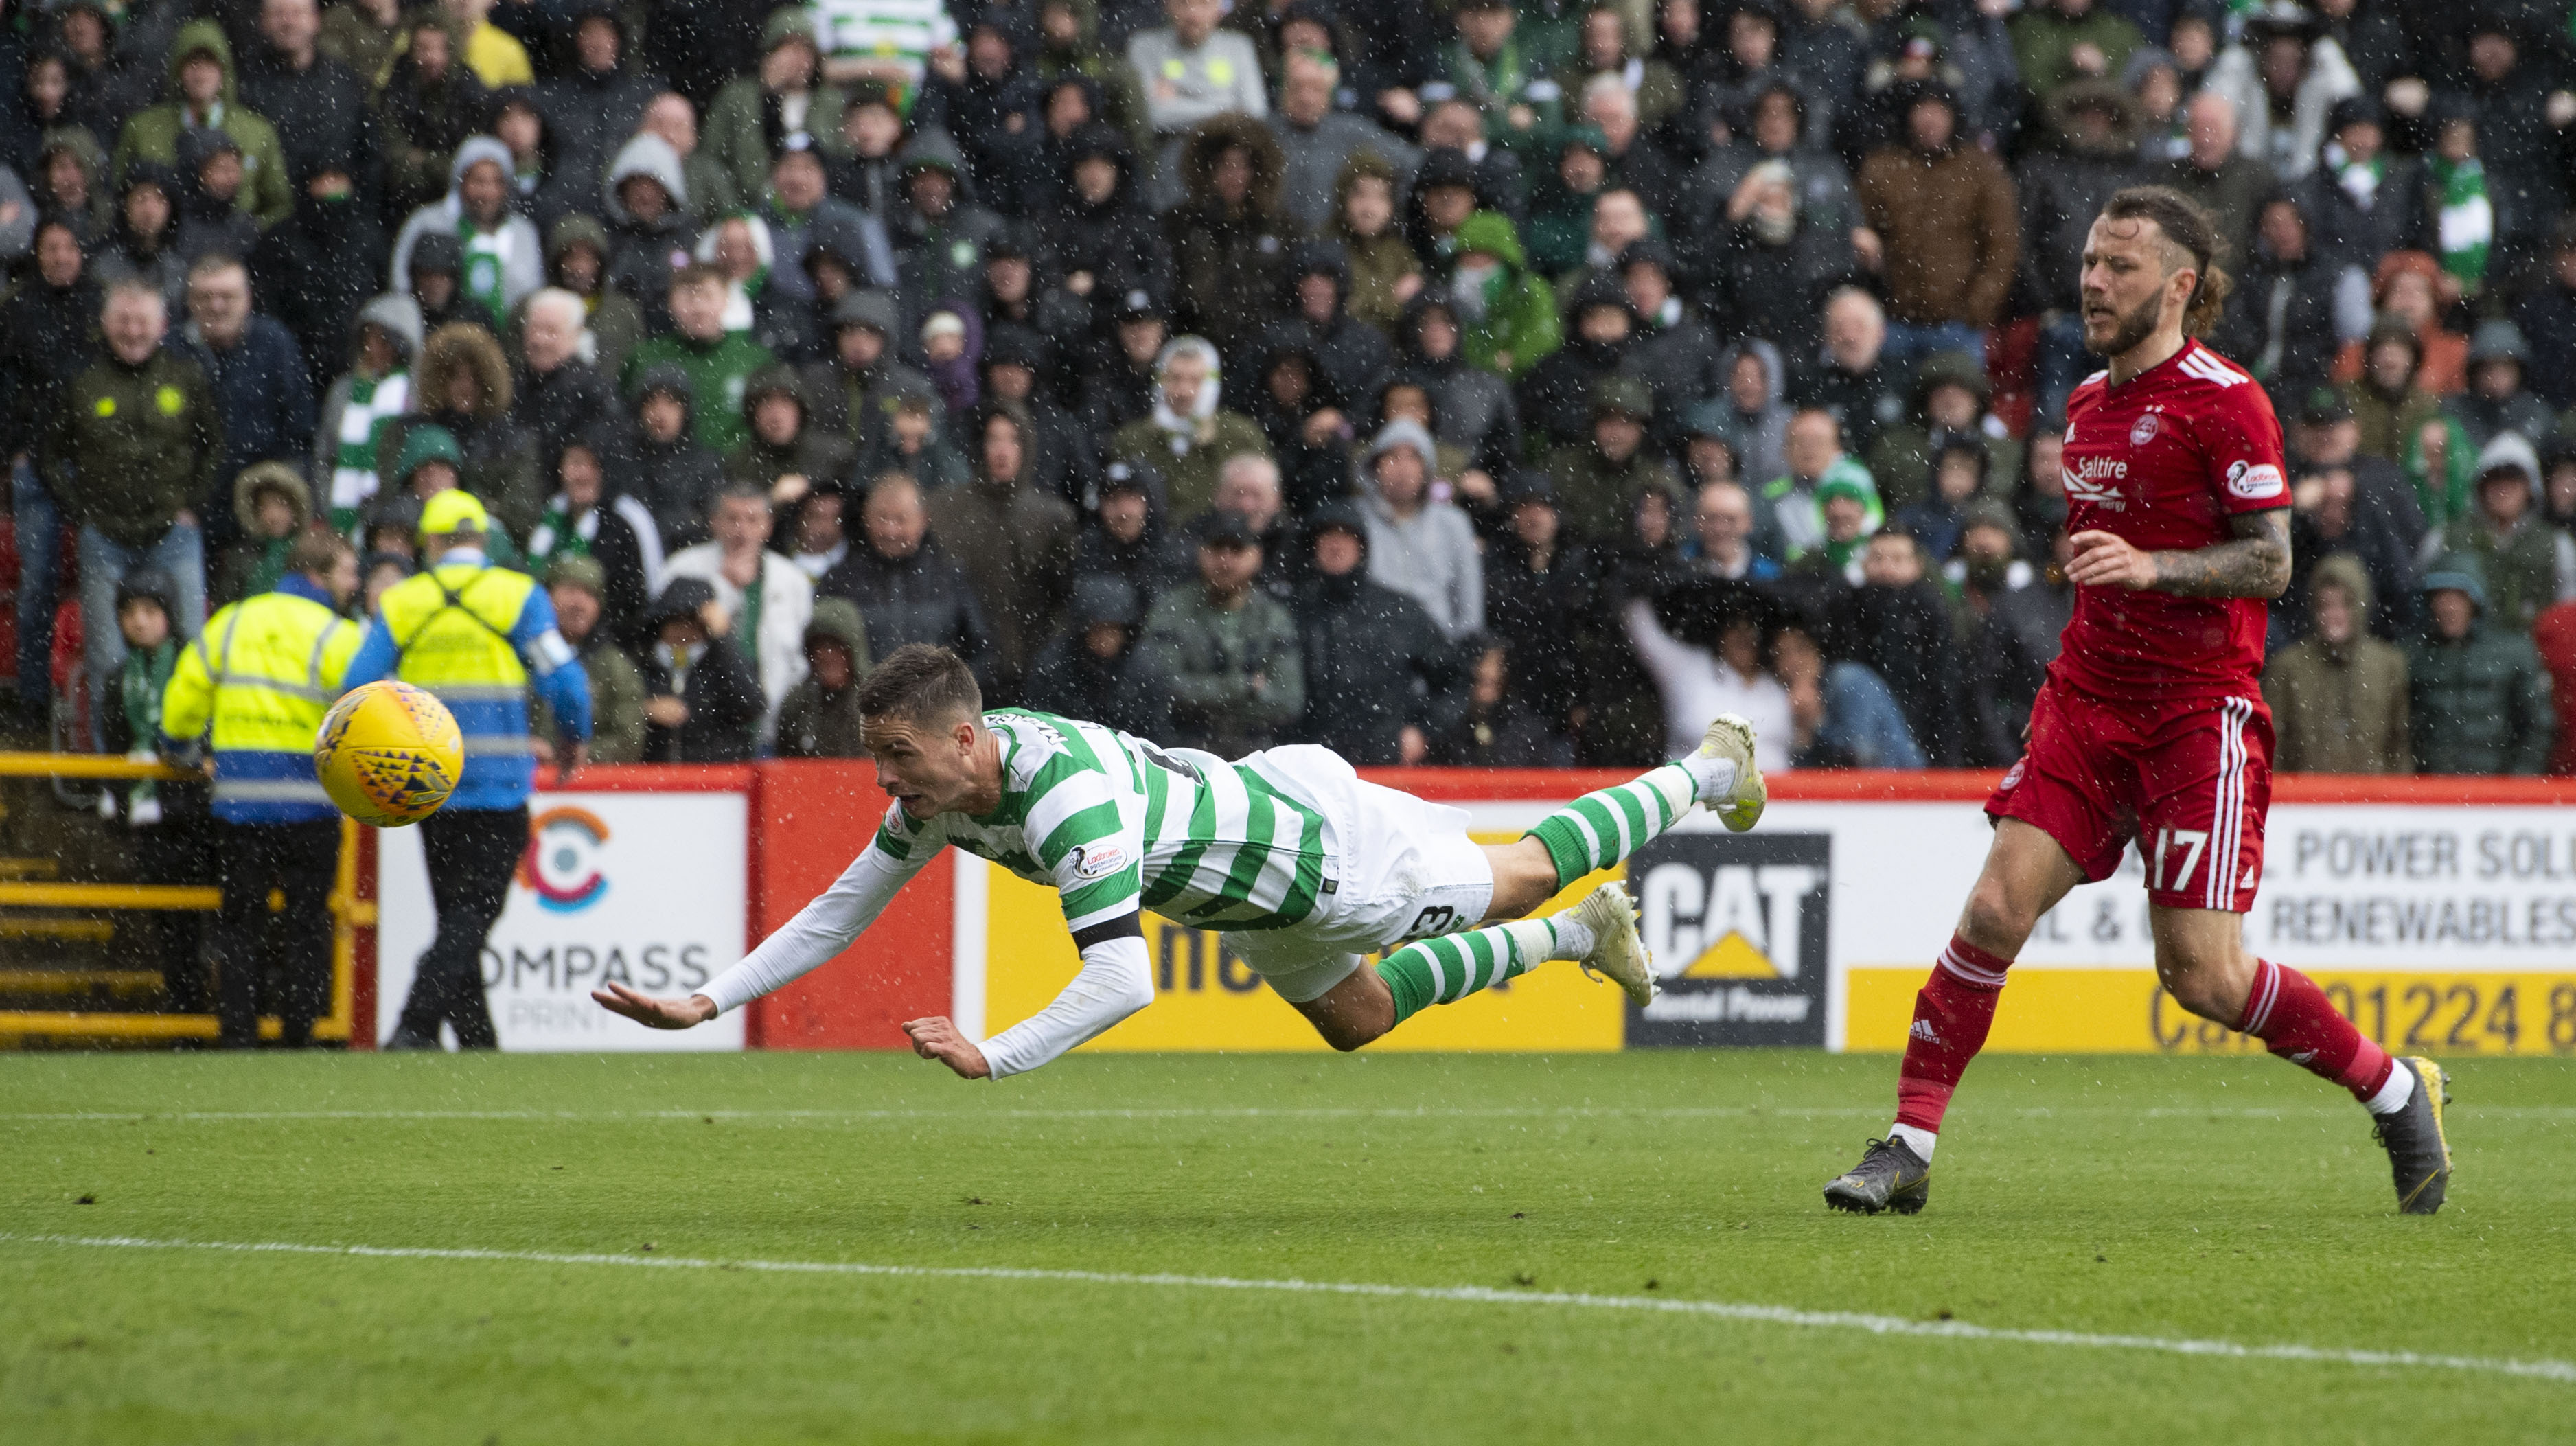 Celtic's Mikael Lustig scores to make it 1-0.